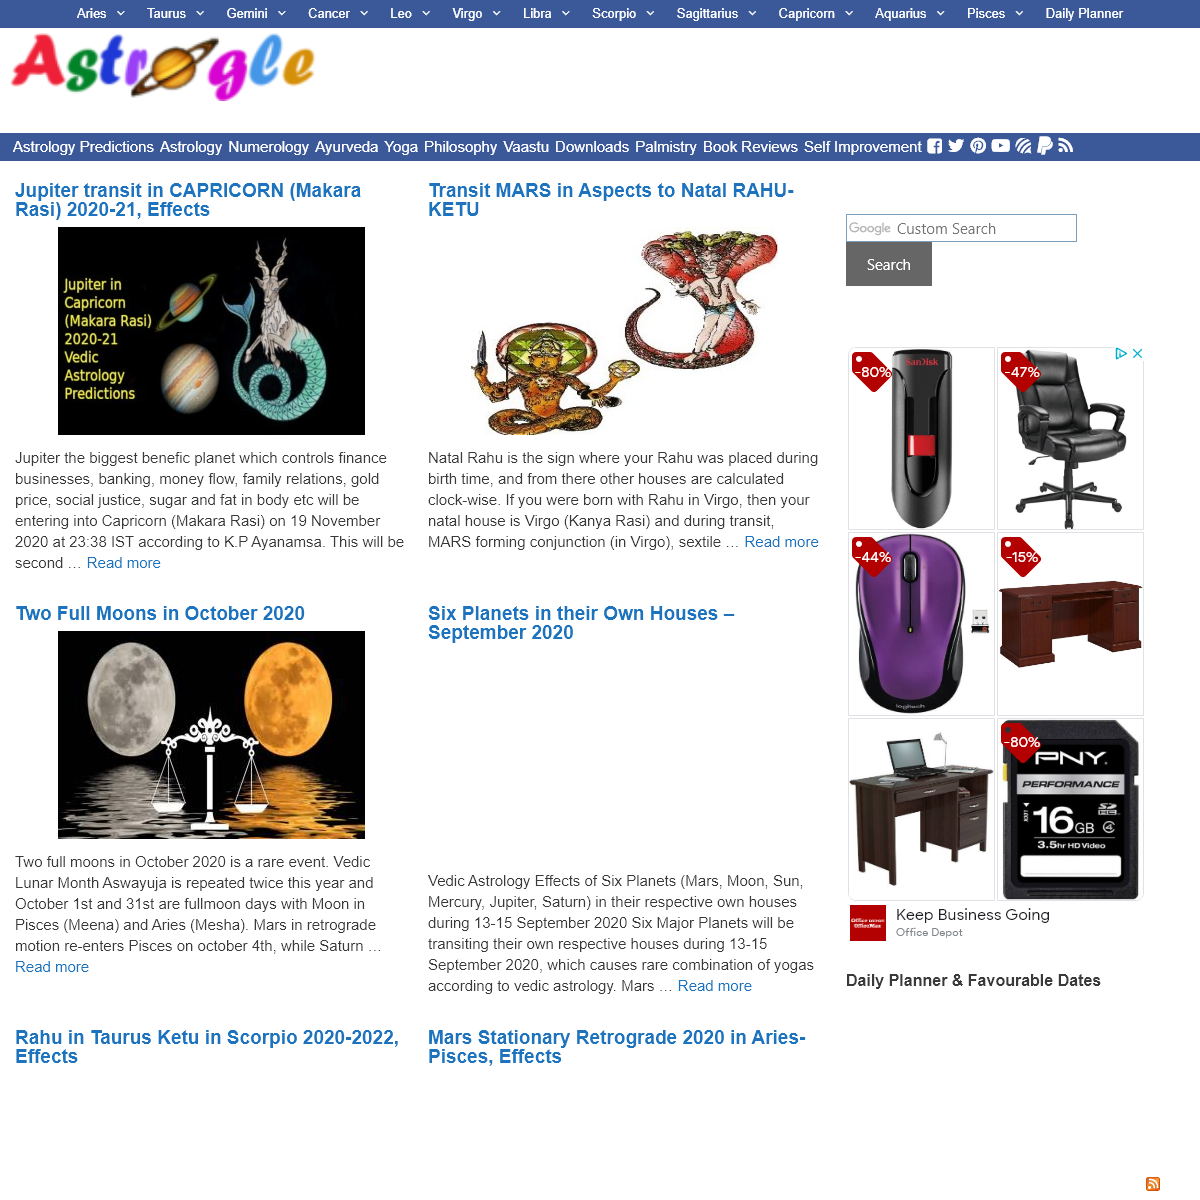 A complete backup of astrogle.com